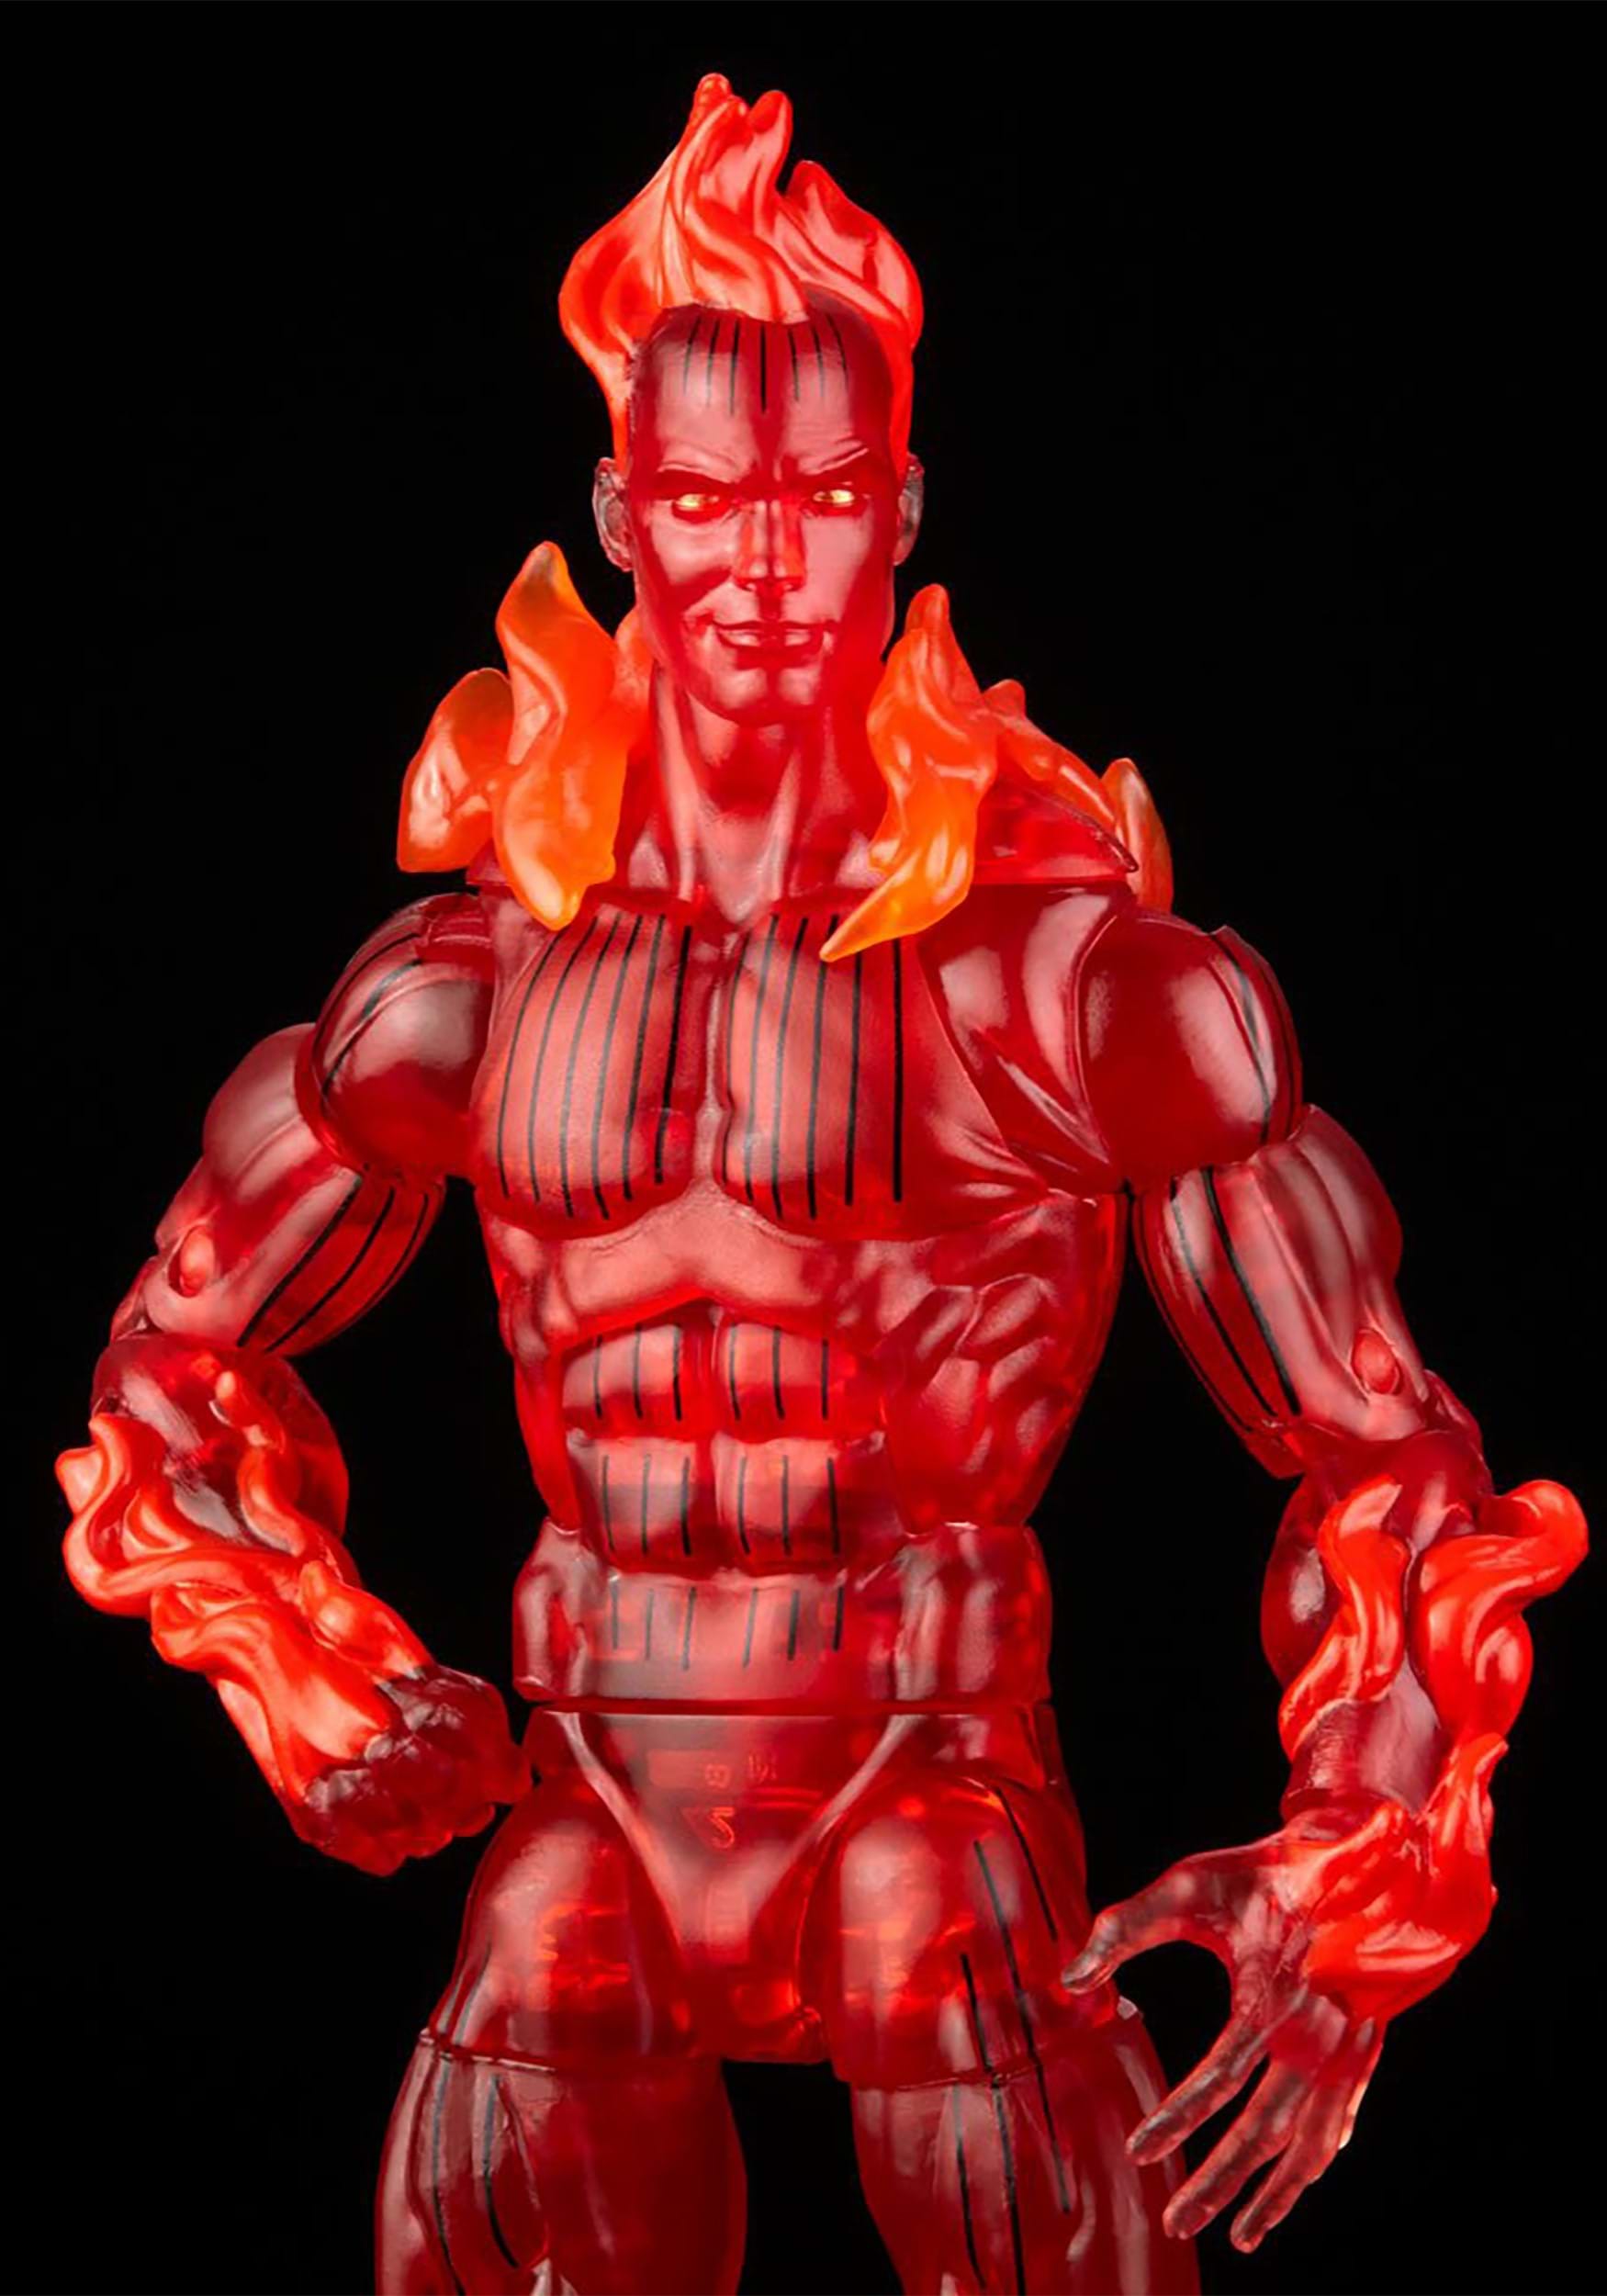 Fantastic Four Marvel Legends Human Torch Action Figure